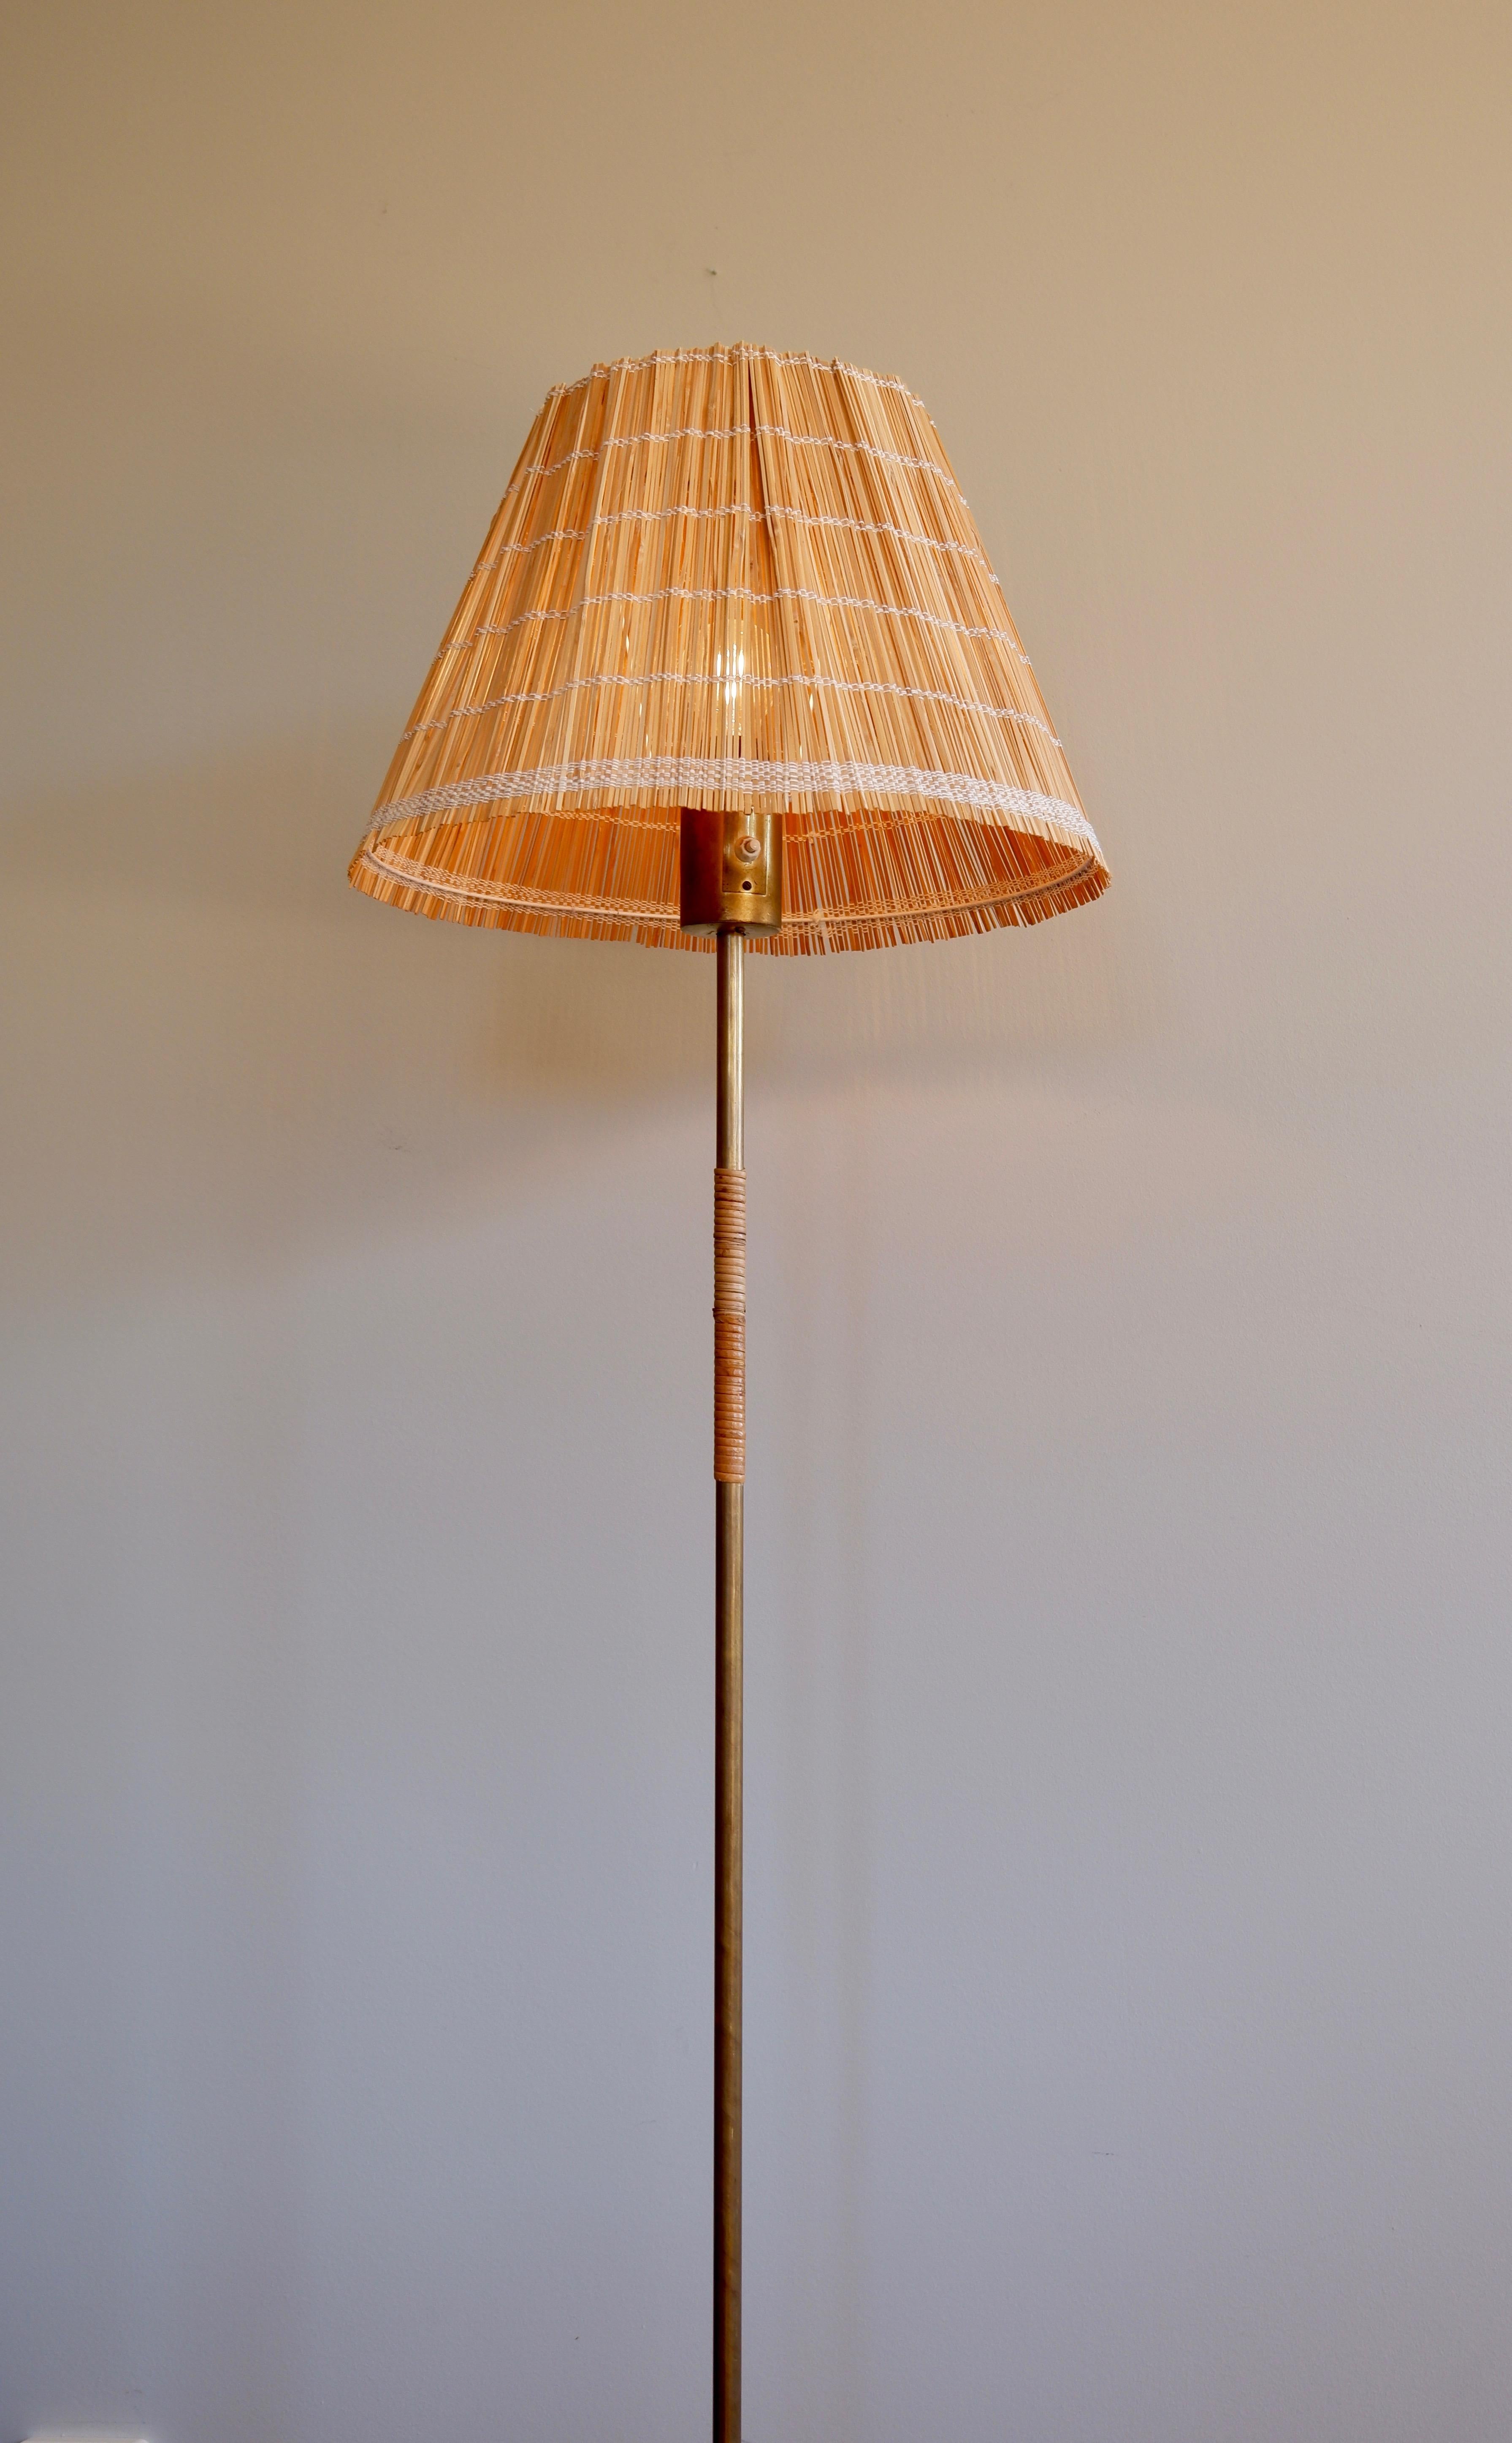 Mid-20th Century Paavo Tynell Floor Lamp Model K10-13 for Idman circa 1950, Brass & Rattan For Sale